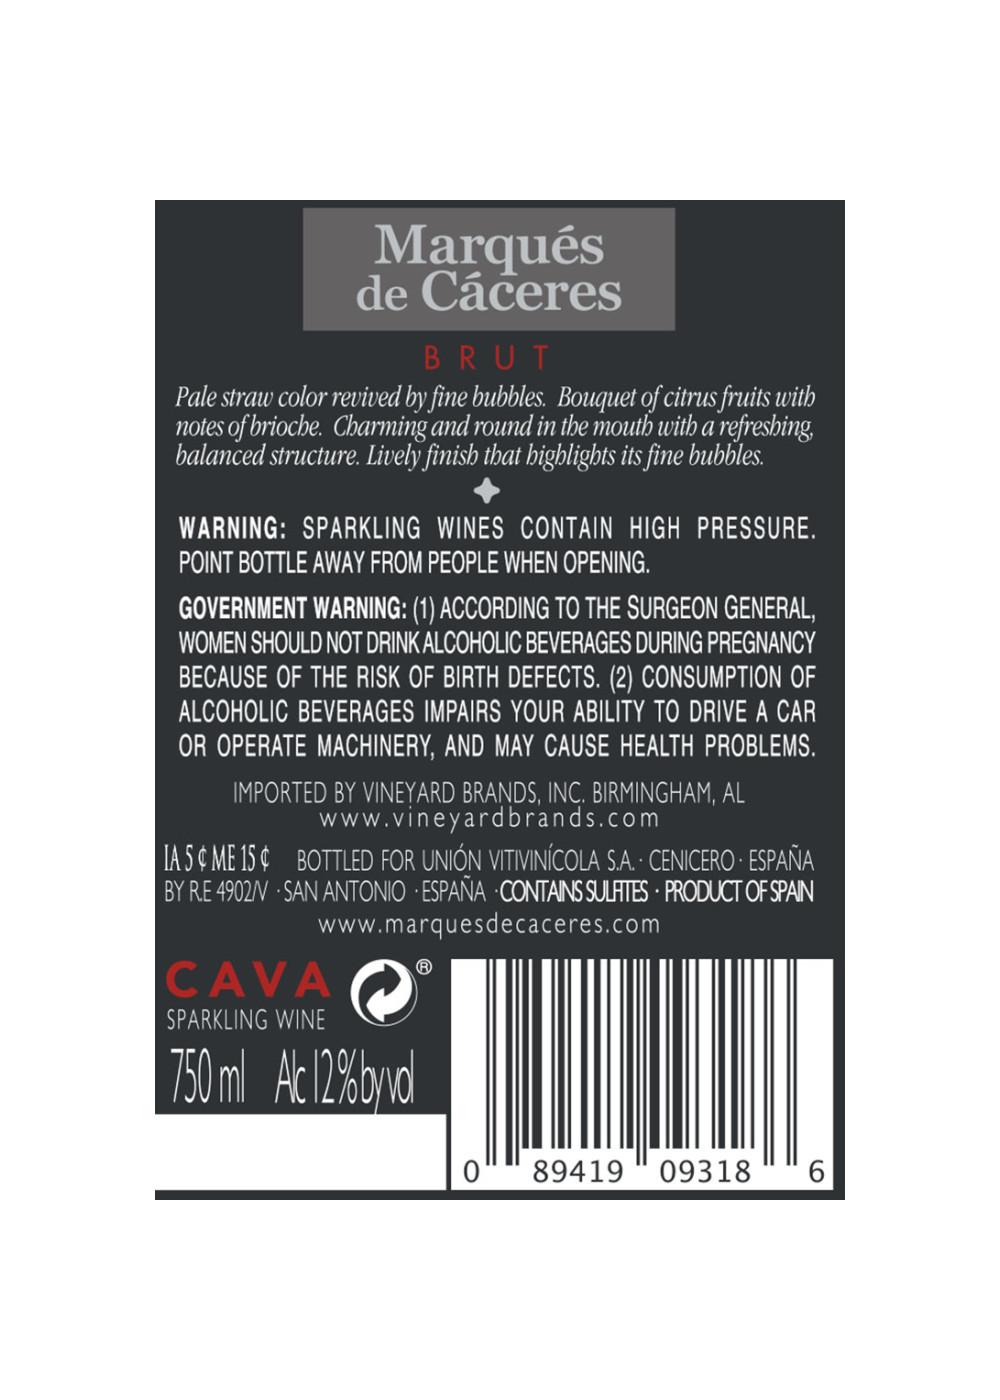 Marques De Caceres Cava Brut Wine; image 2 of 2